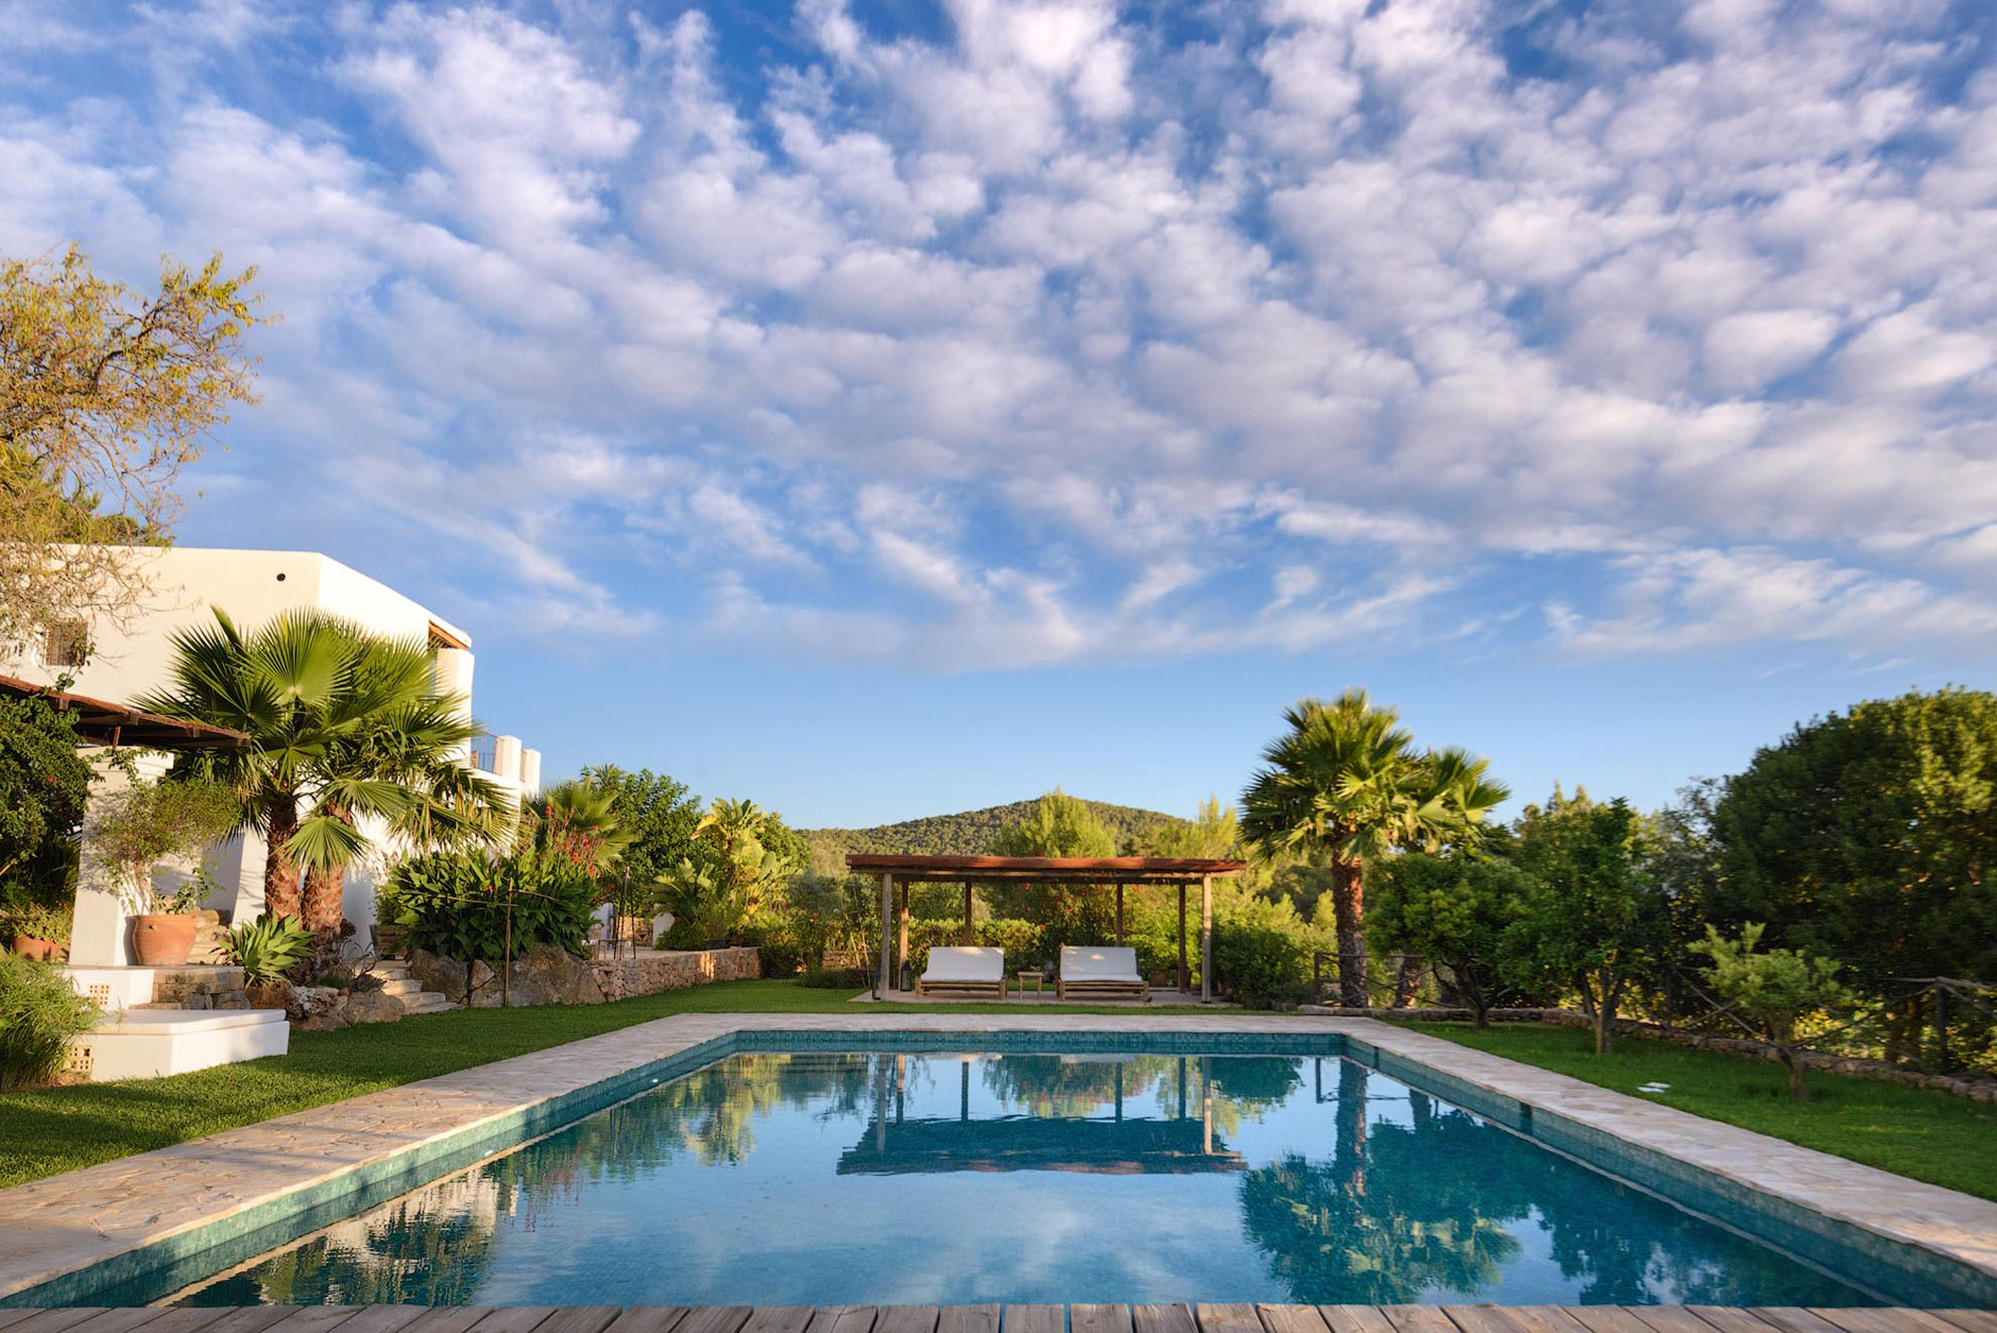 Swimming pool of Villa Mariposa designed by Blakstad